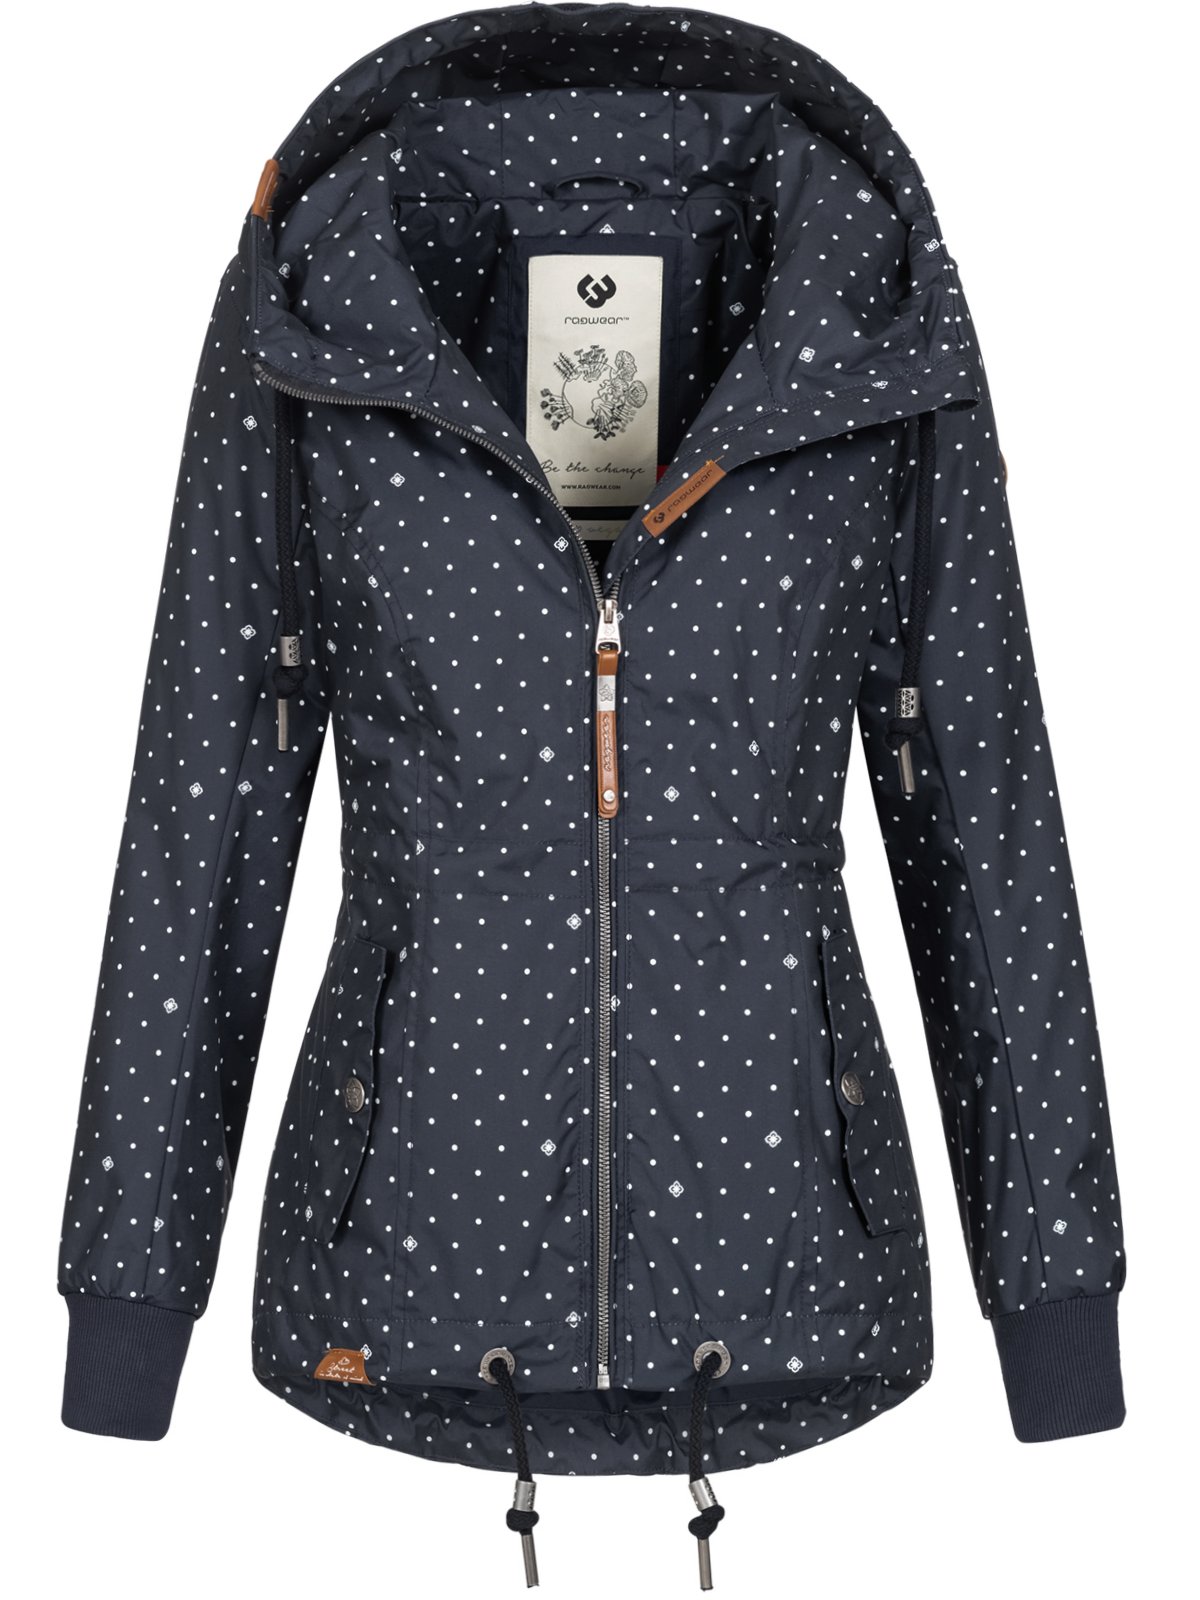 Ragwear Damen Übergangsjacke Jacke Damenjacke Regenjacke Kapuzenjacke Danka  | eBay